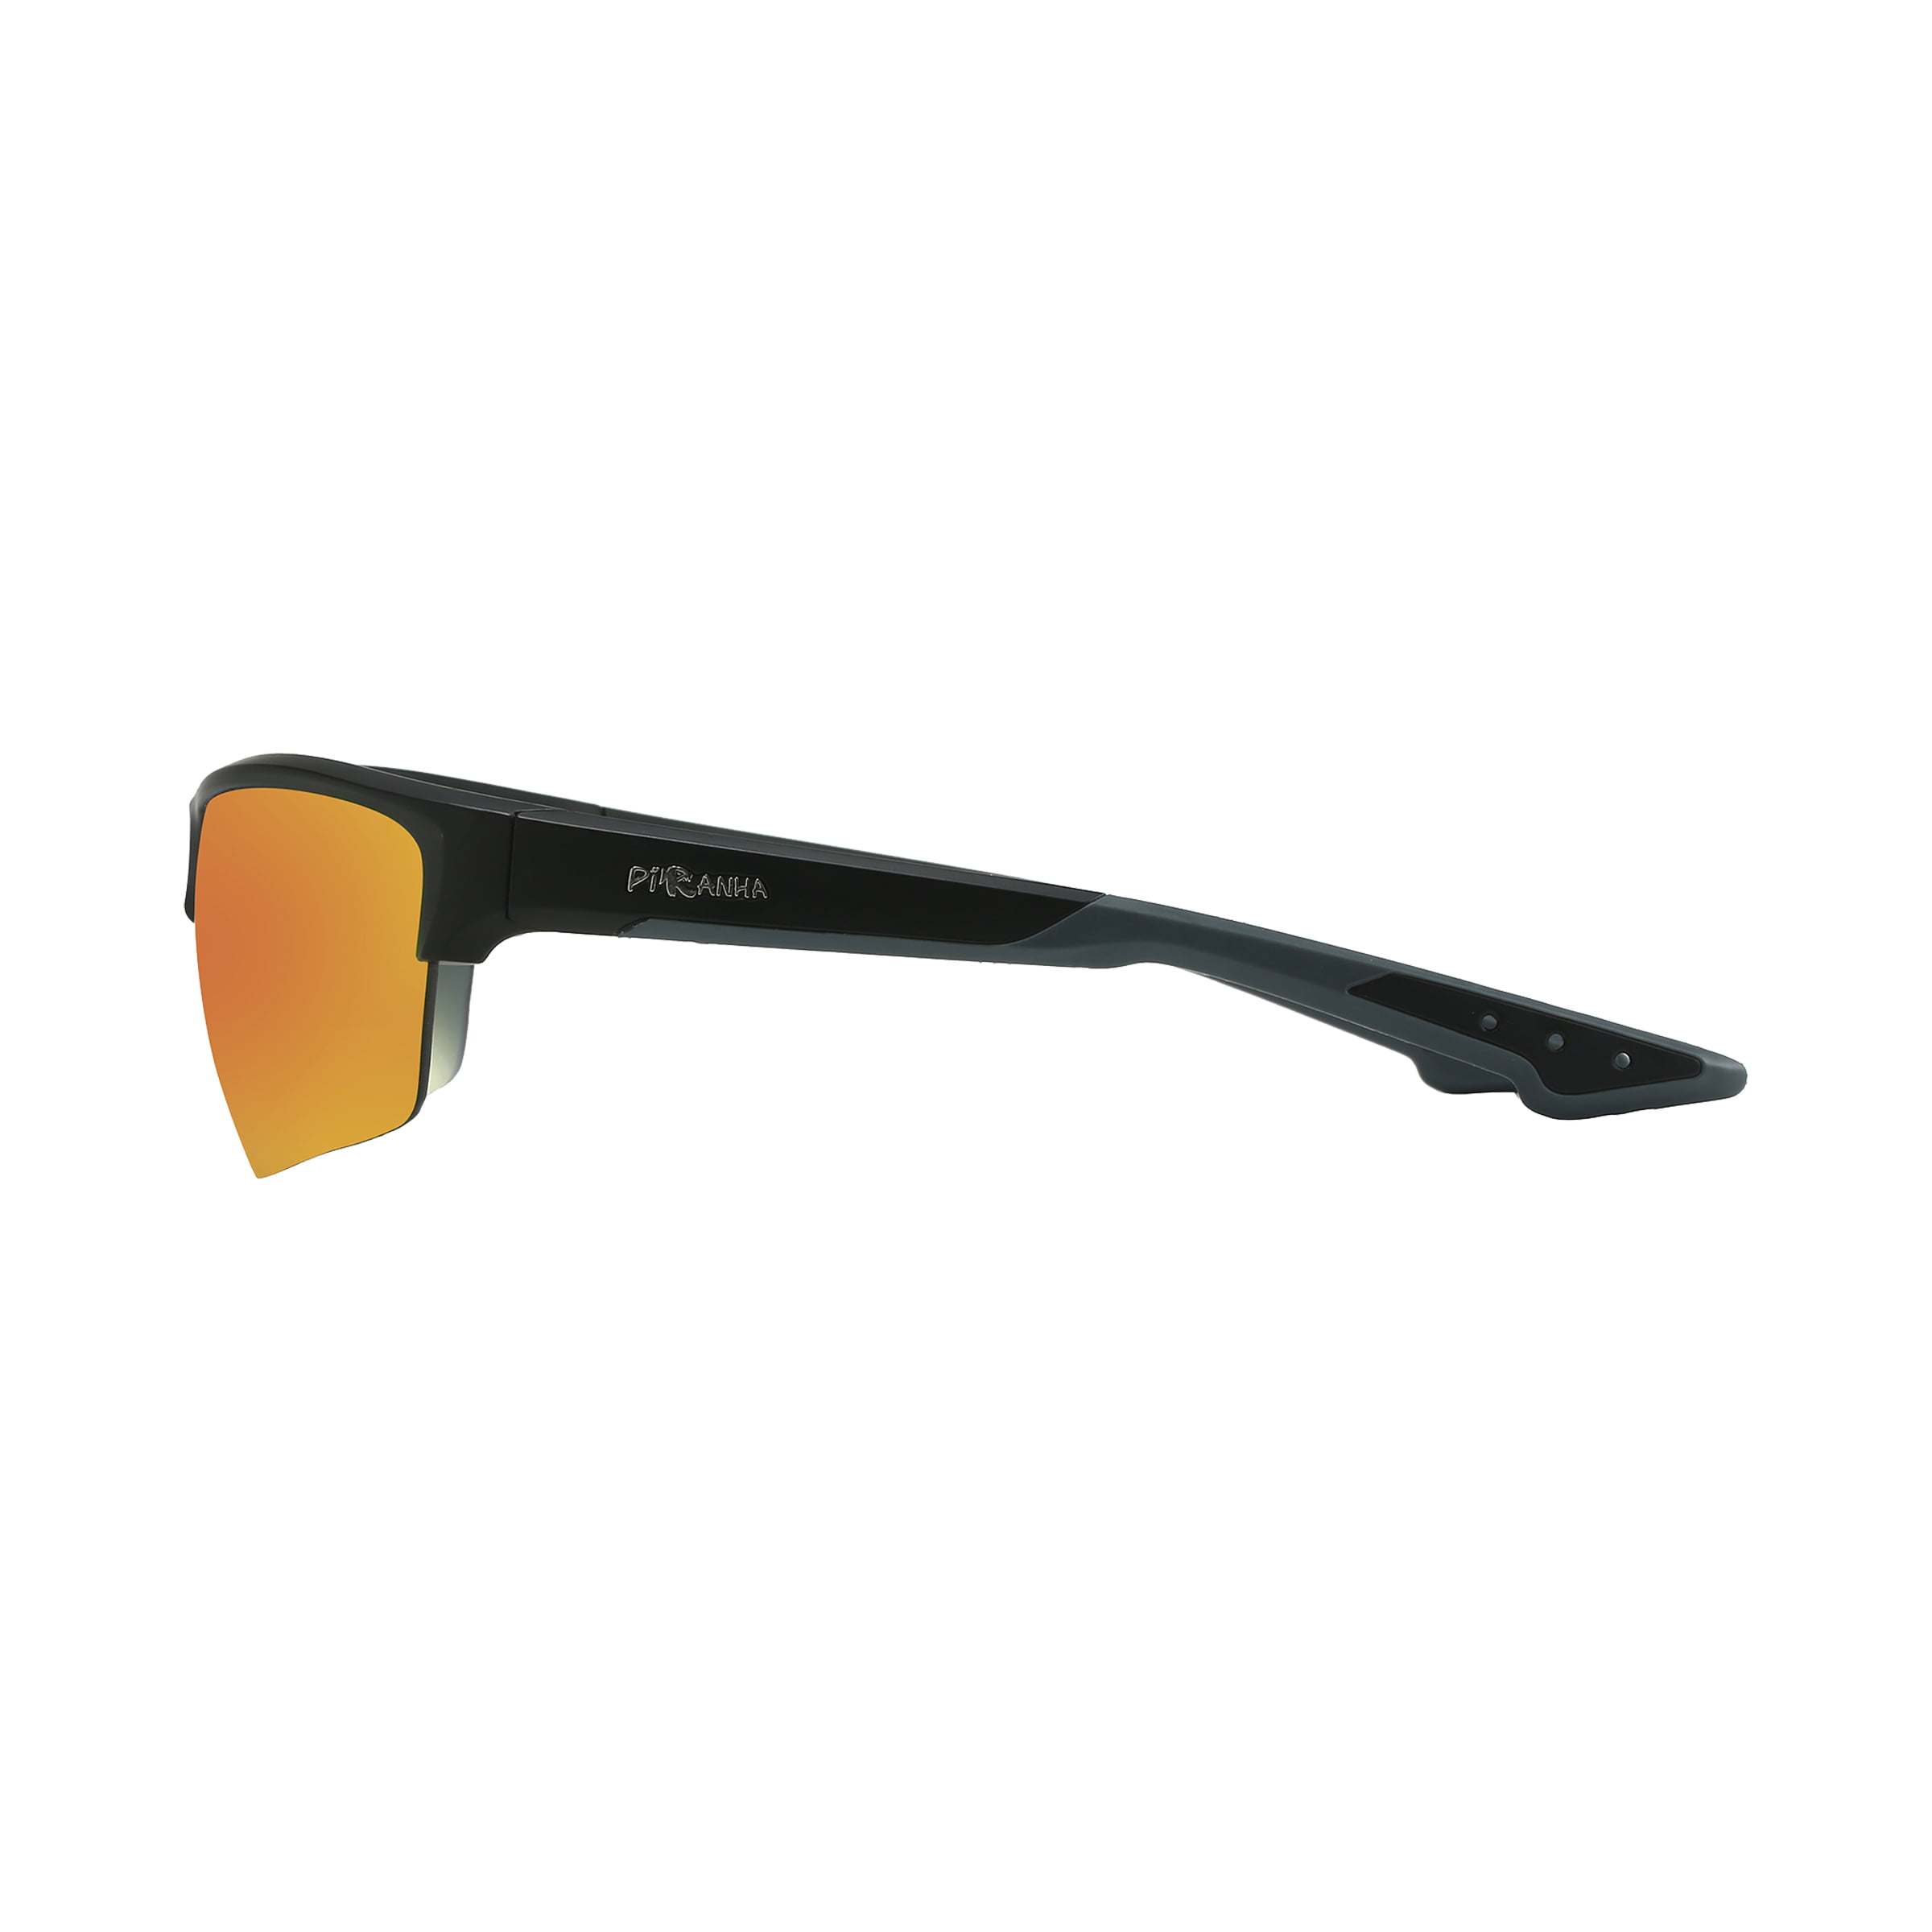 Piranha Eyewear Noah Wide Sports Sunglasses for Men - Orange Mirror Lenses  